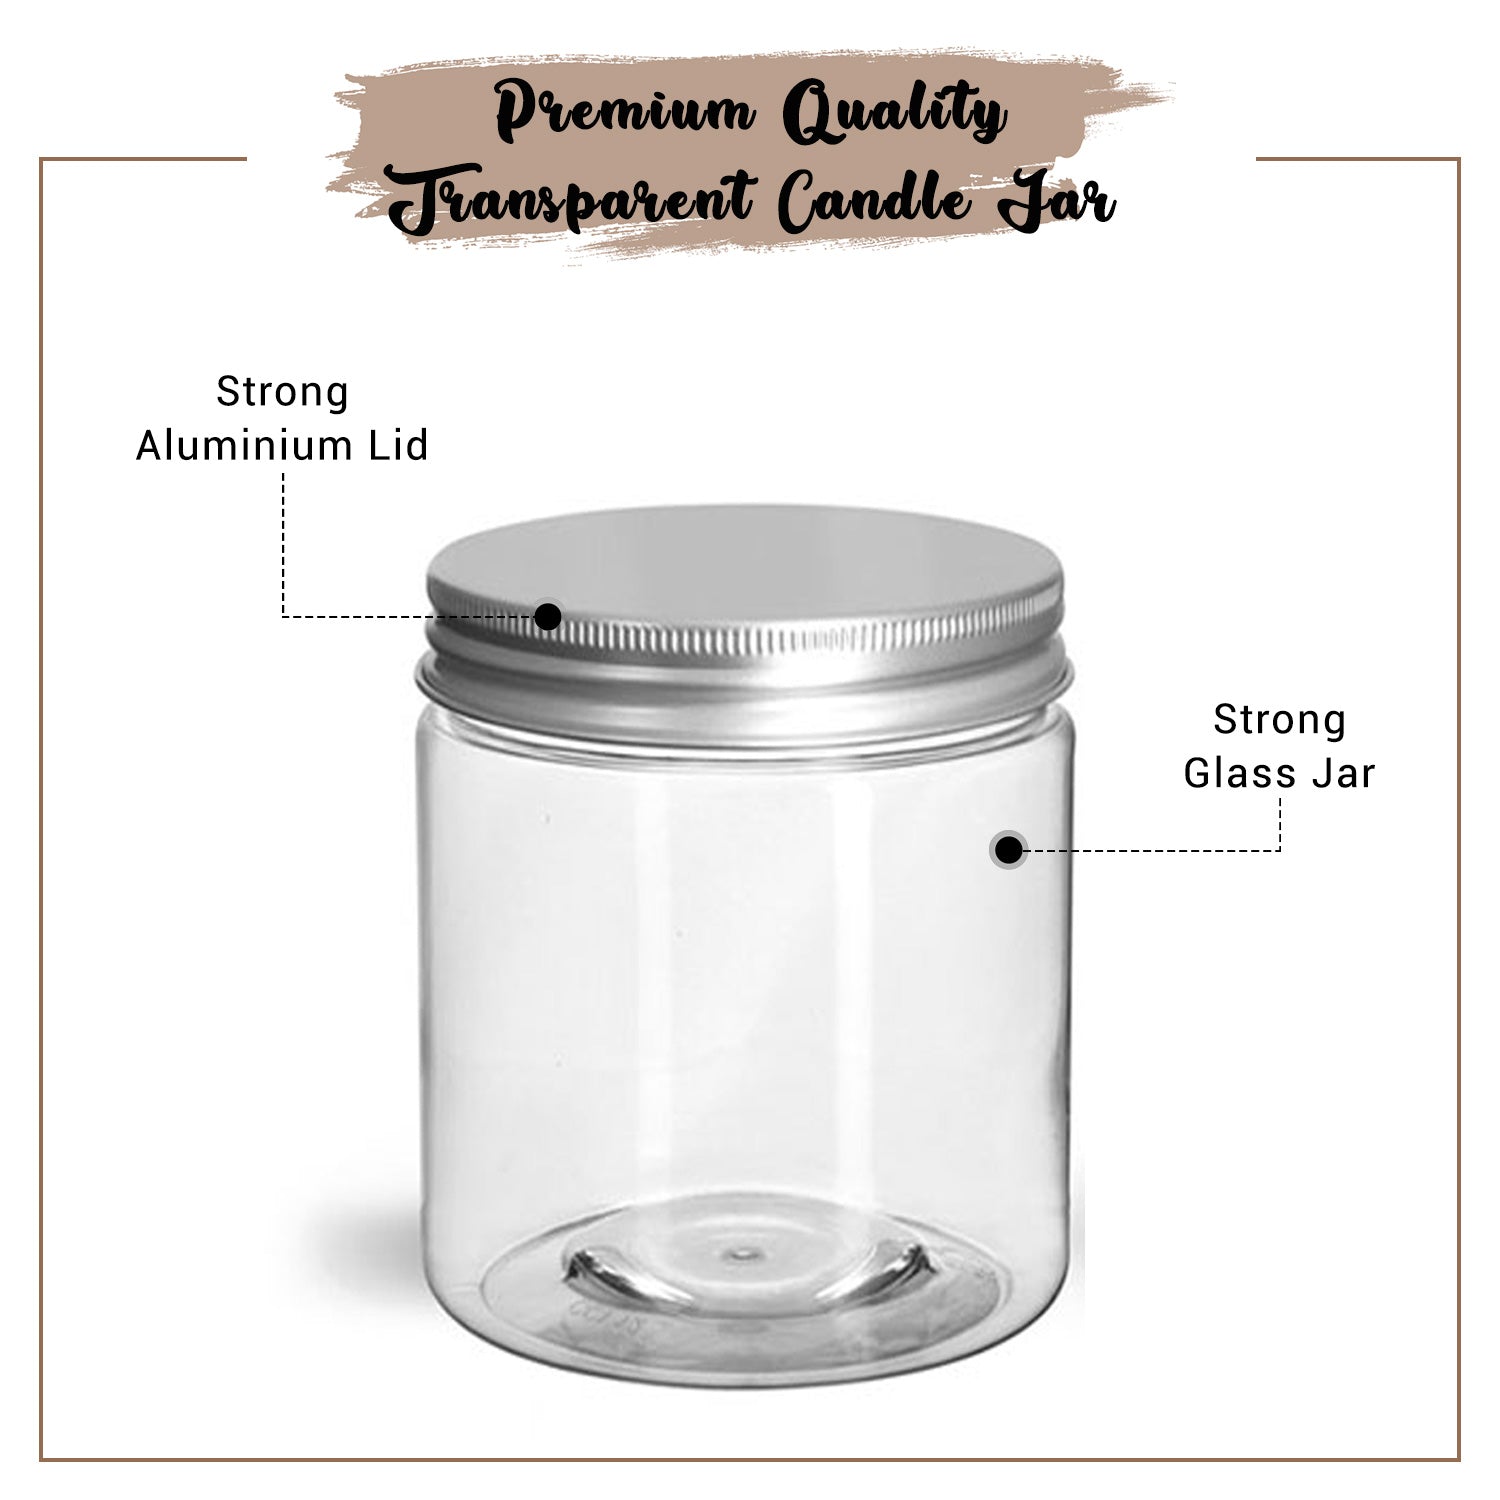 Transparent Candle Jar Quality